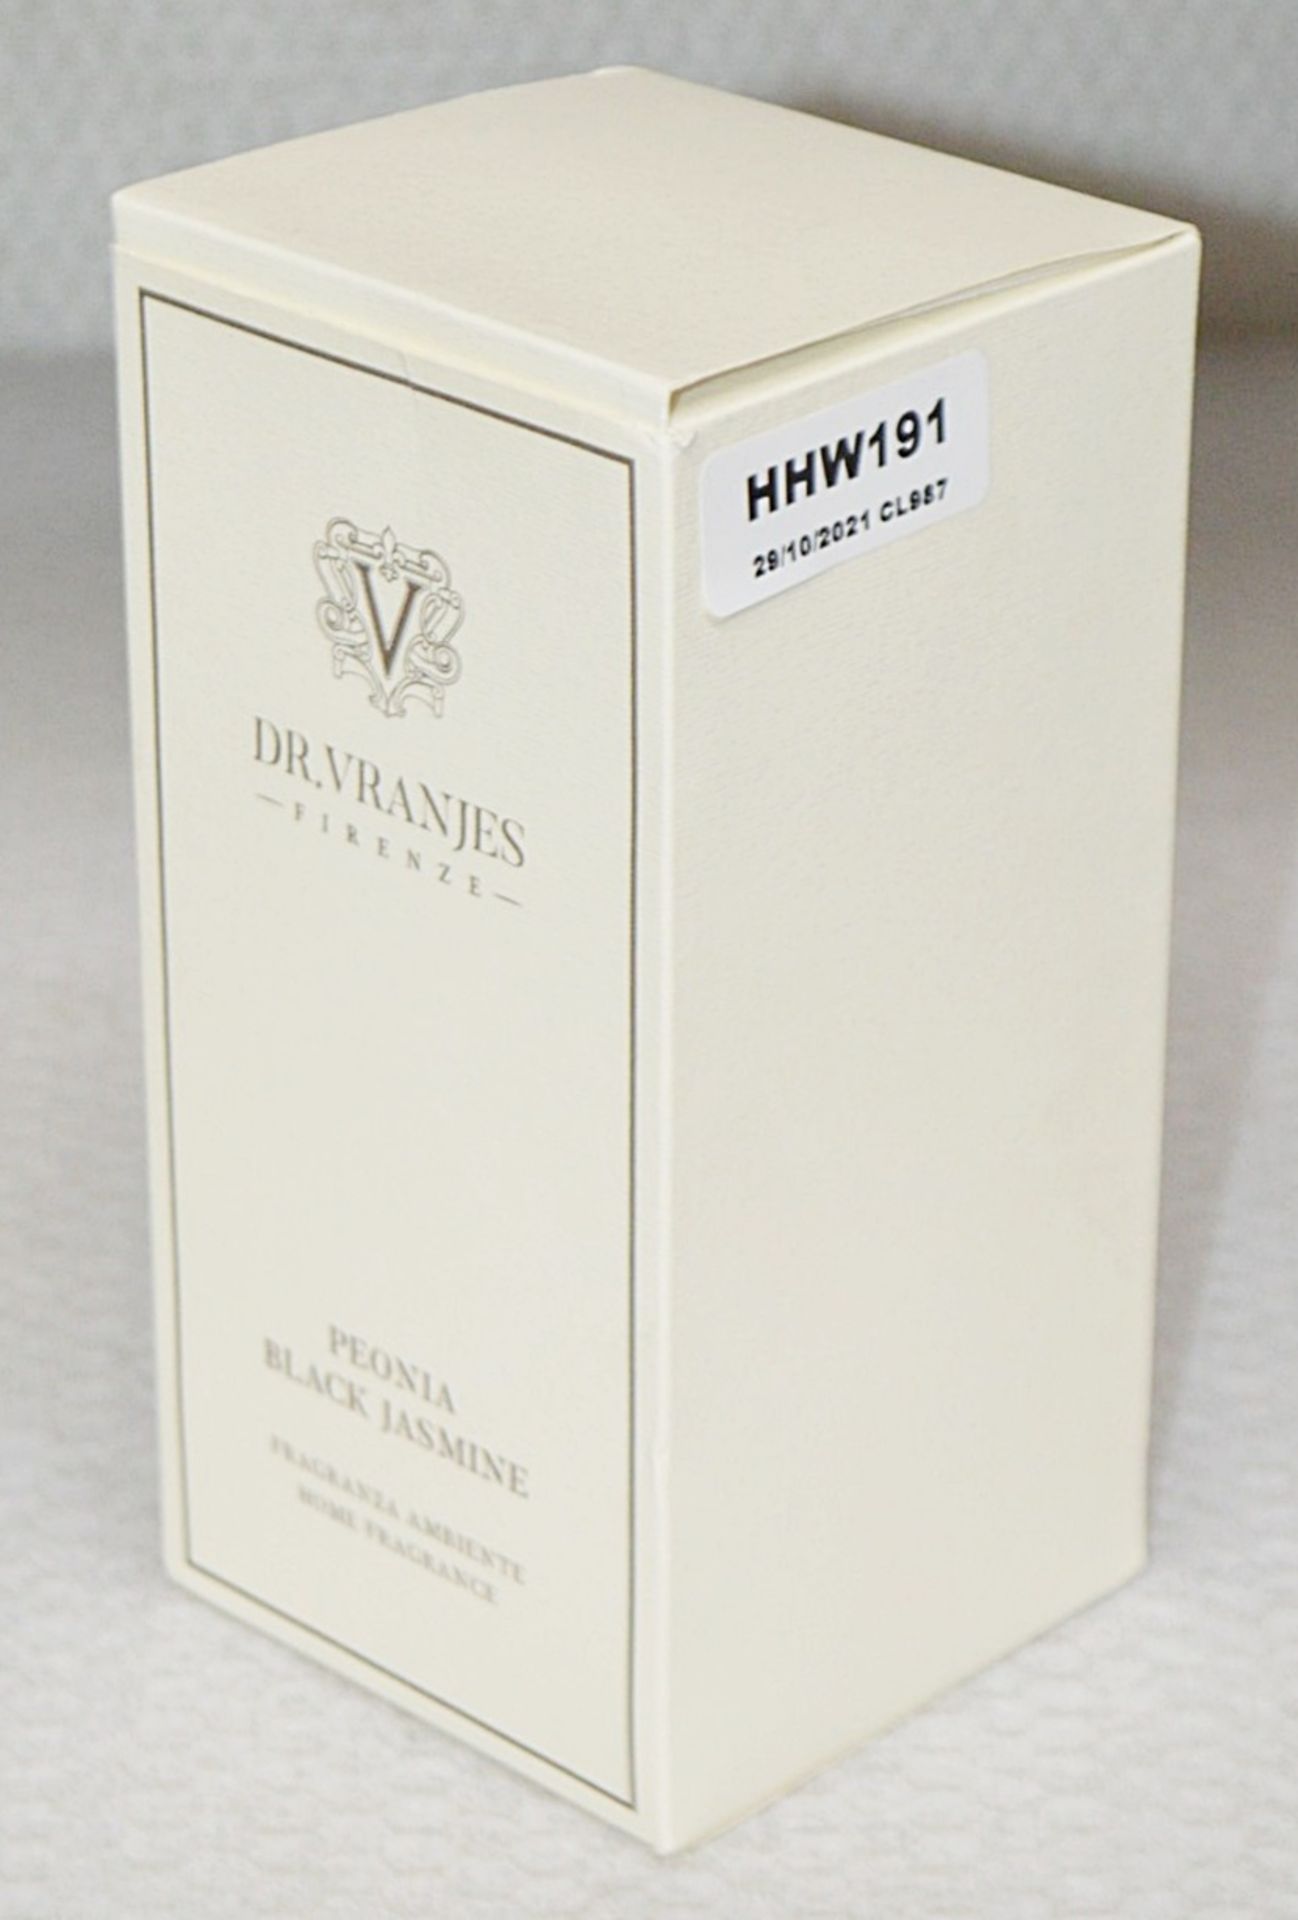 1 x DR. VRANJES FIRENZE Peonia Black Jasmine Diffuser (500ml) - Original Price £78.00 - Ex-display - - Image 2 of 3